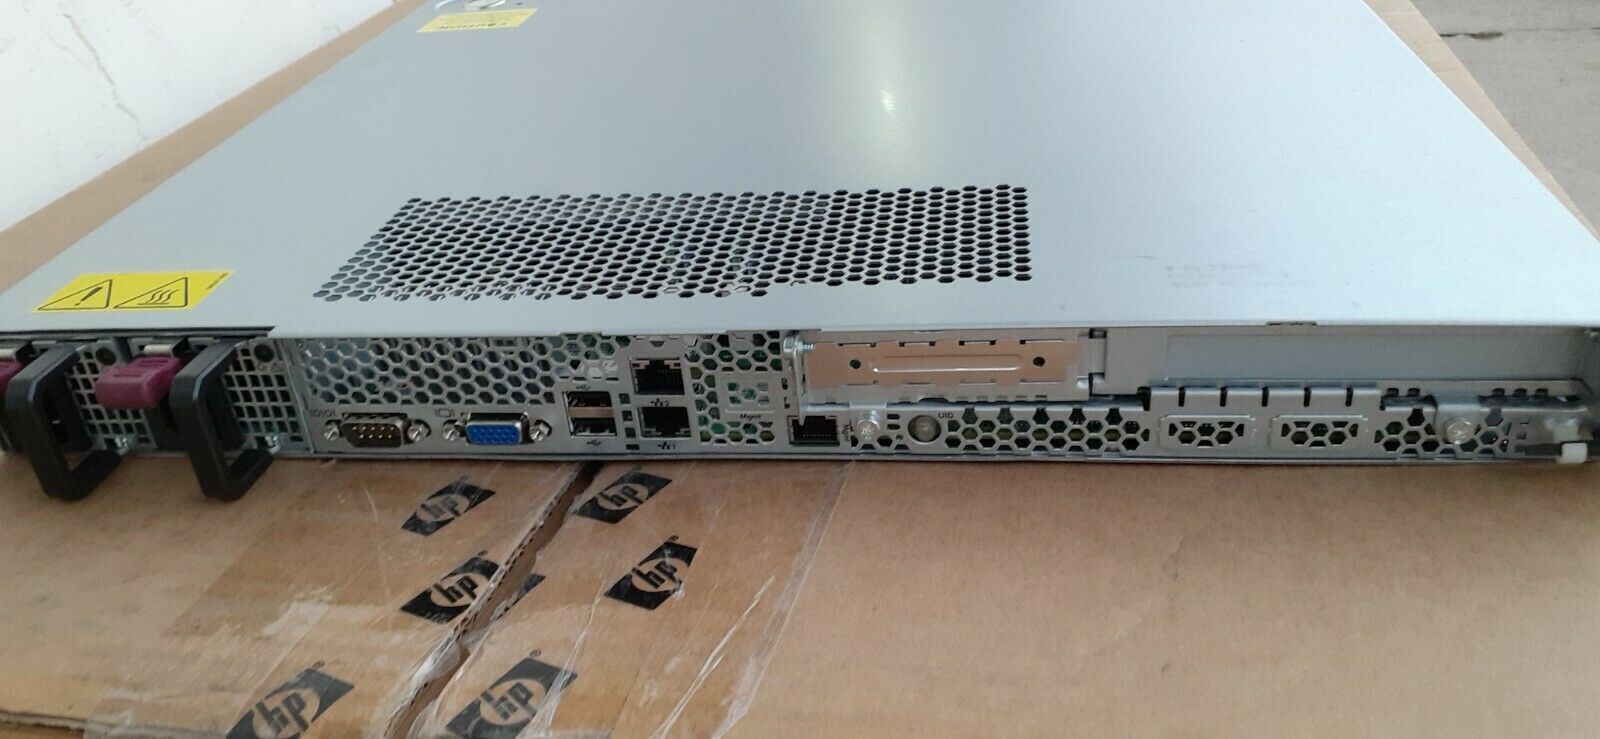 HP ProLiant SE316M1 Dual Xeon Quad-Core L5520 2.26GHz 16GB Ram Server+Rail Kit